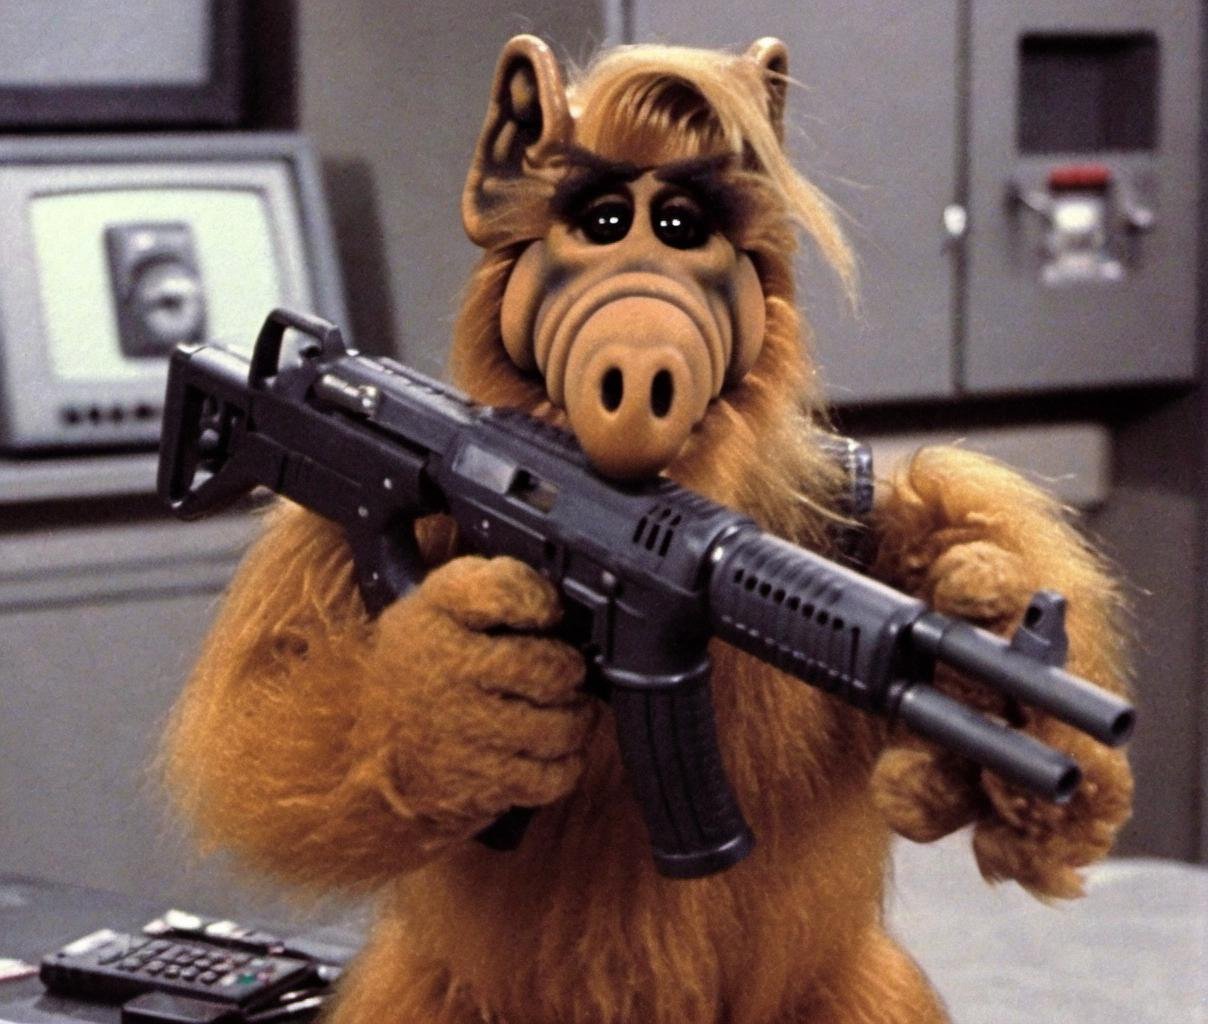 <lora:Alf Person - 1500:1> alf person holding a machine gun at the shooting range. photorealisitc, angry alf.